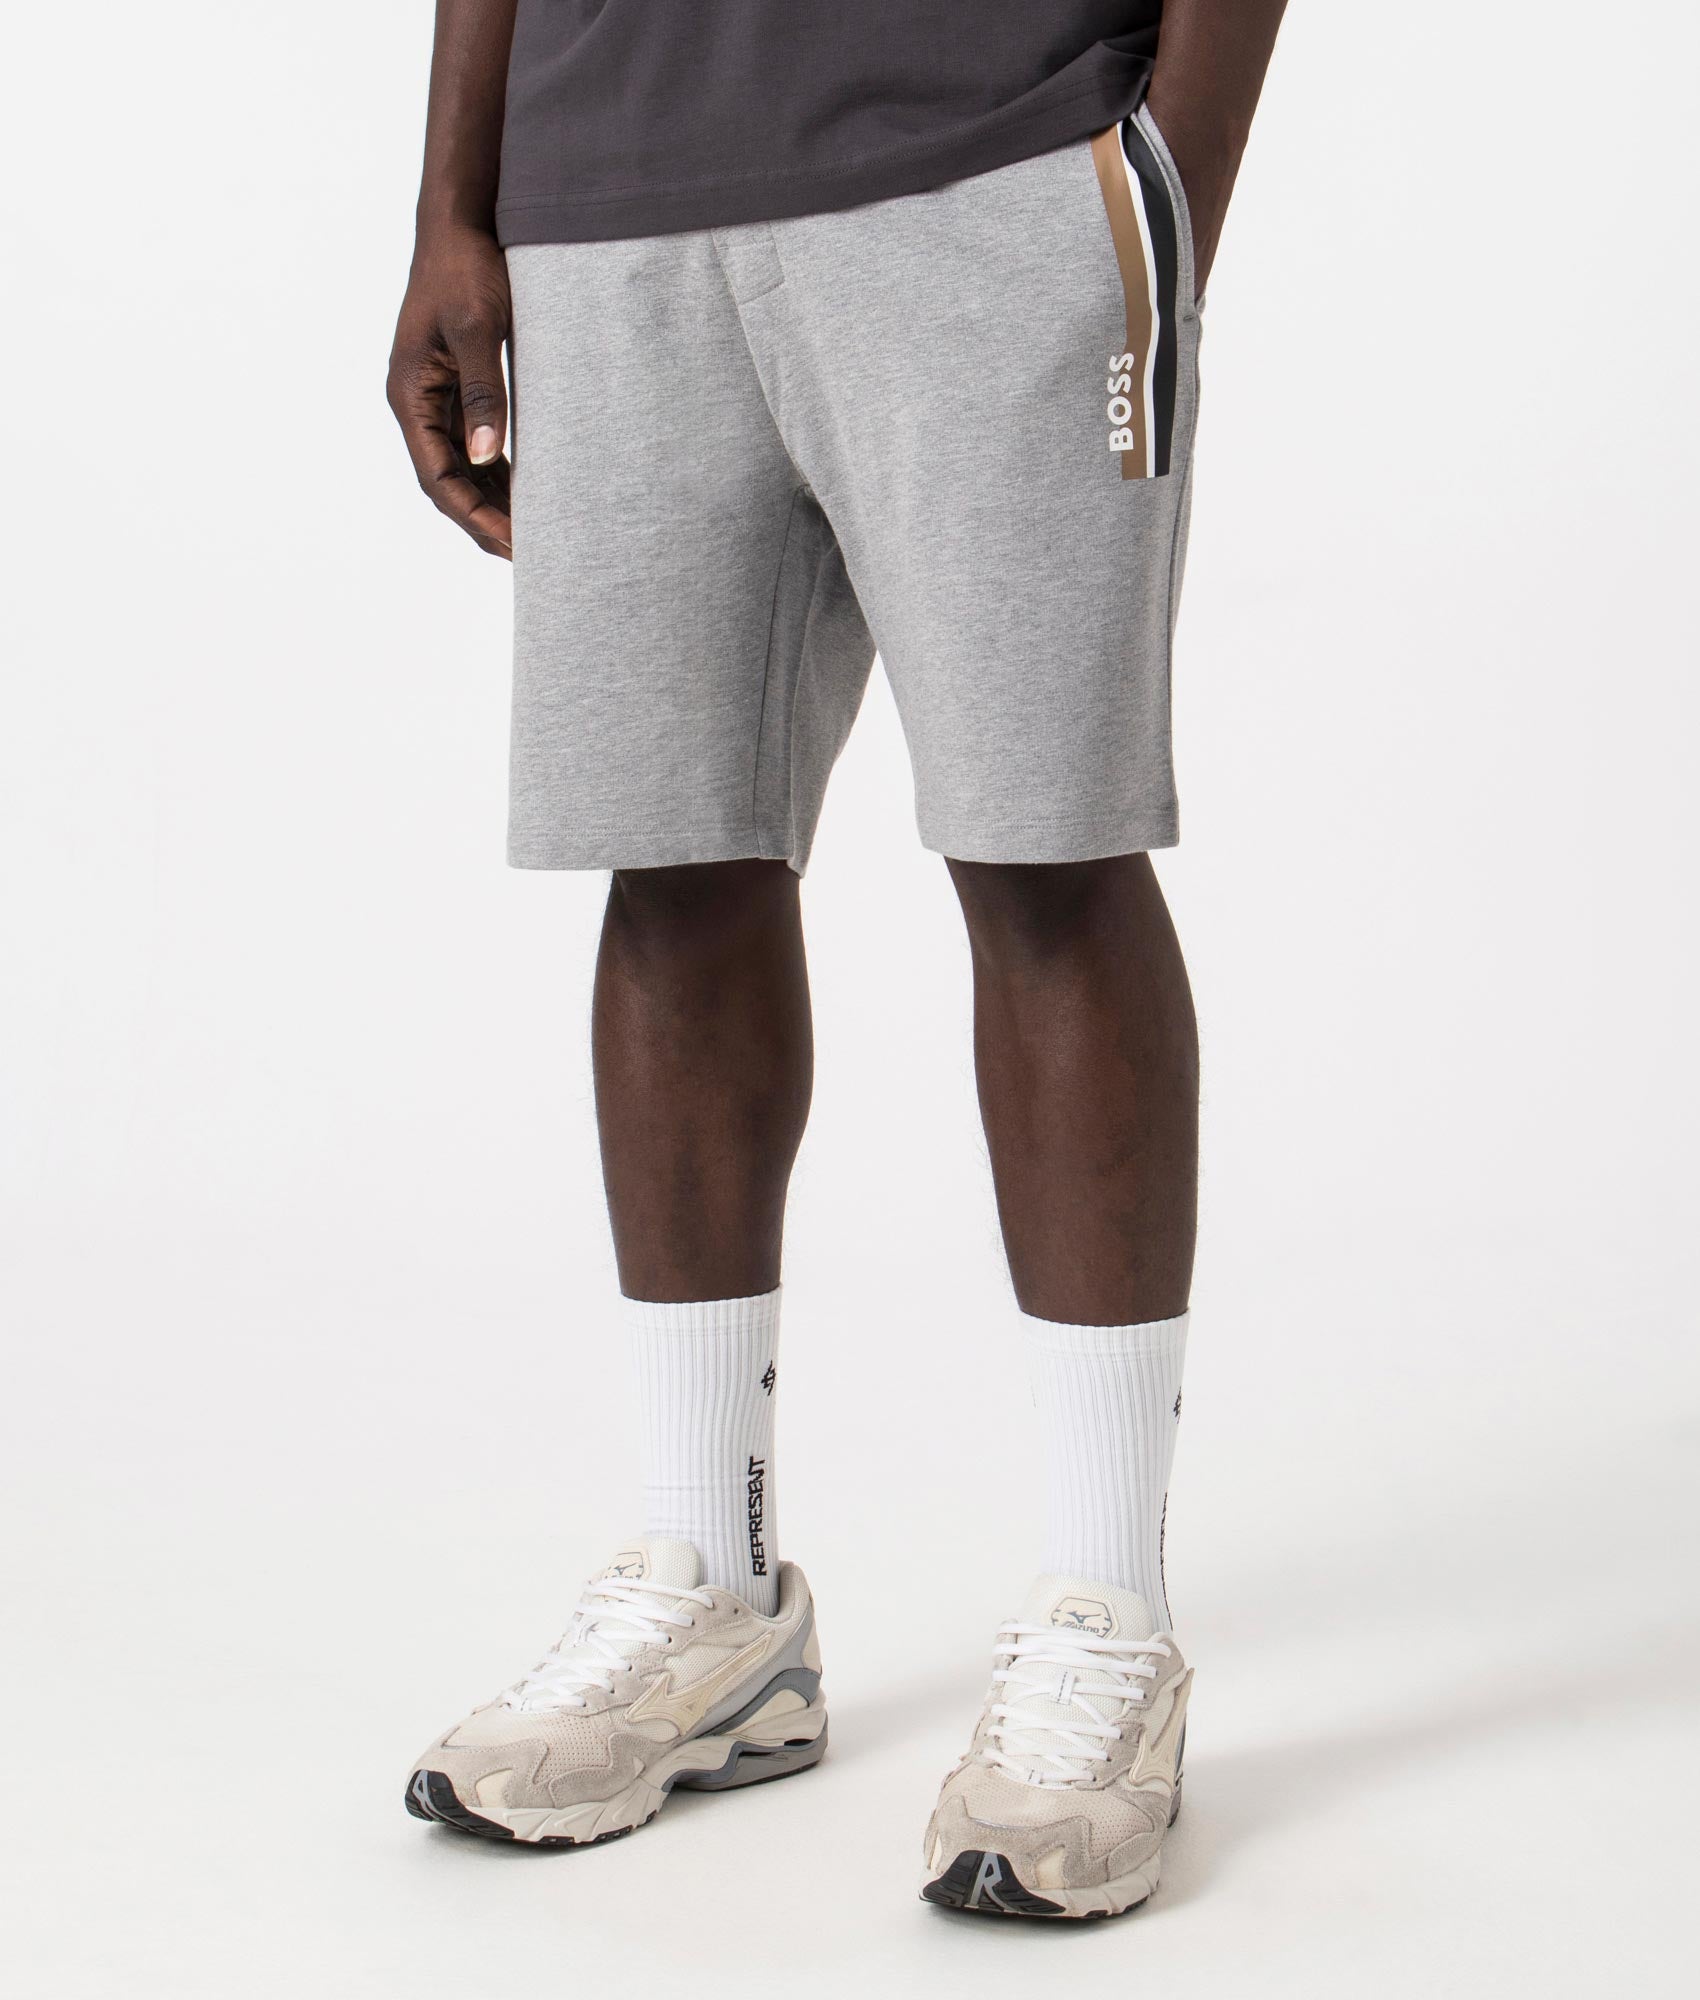 BOSS Mens Authentic Shorts - Colour: 033 Medium Grey - Size: Small